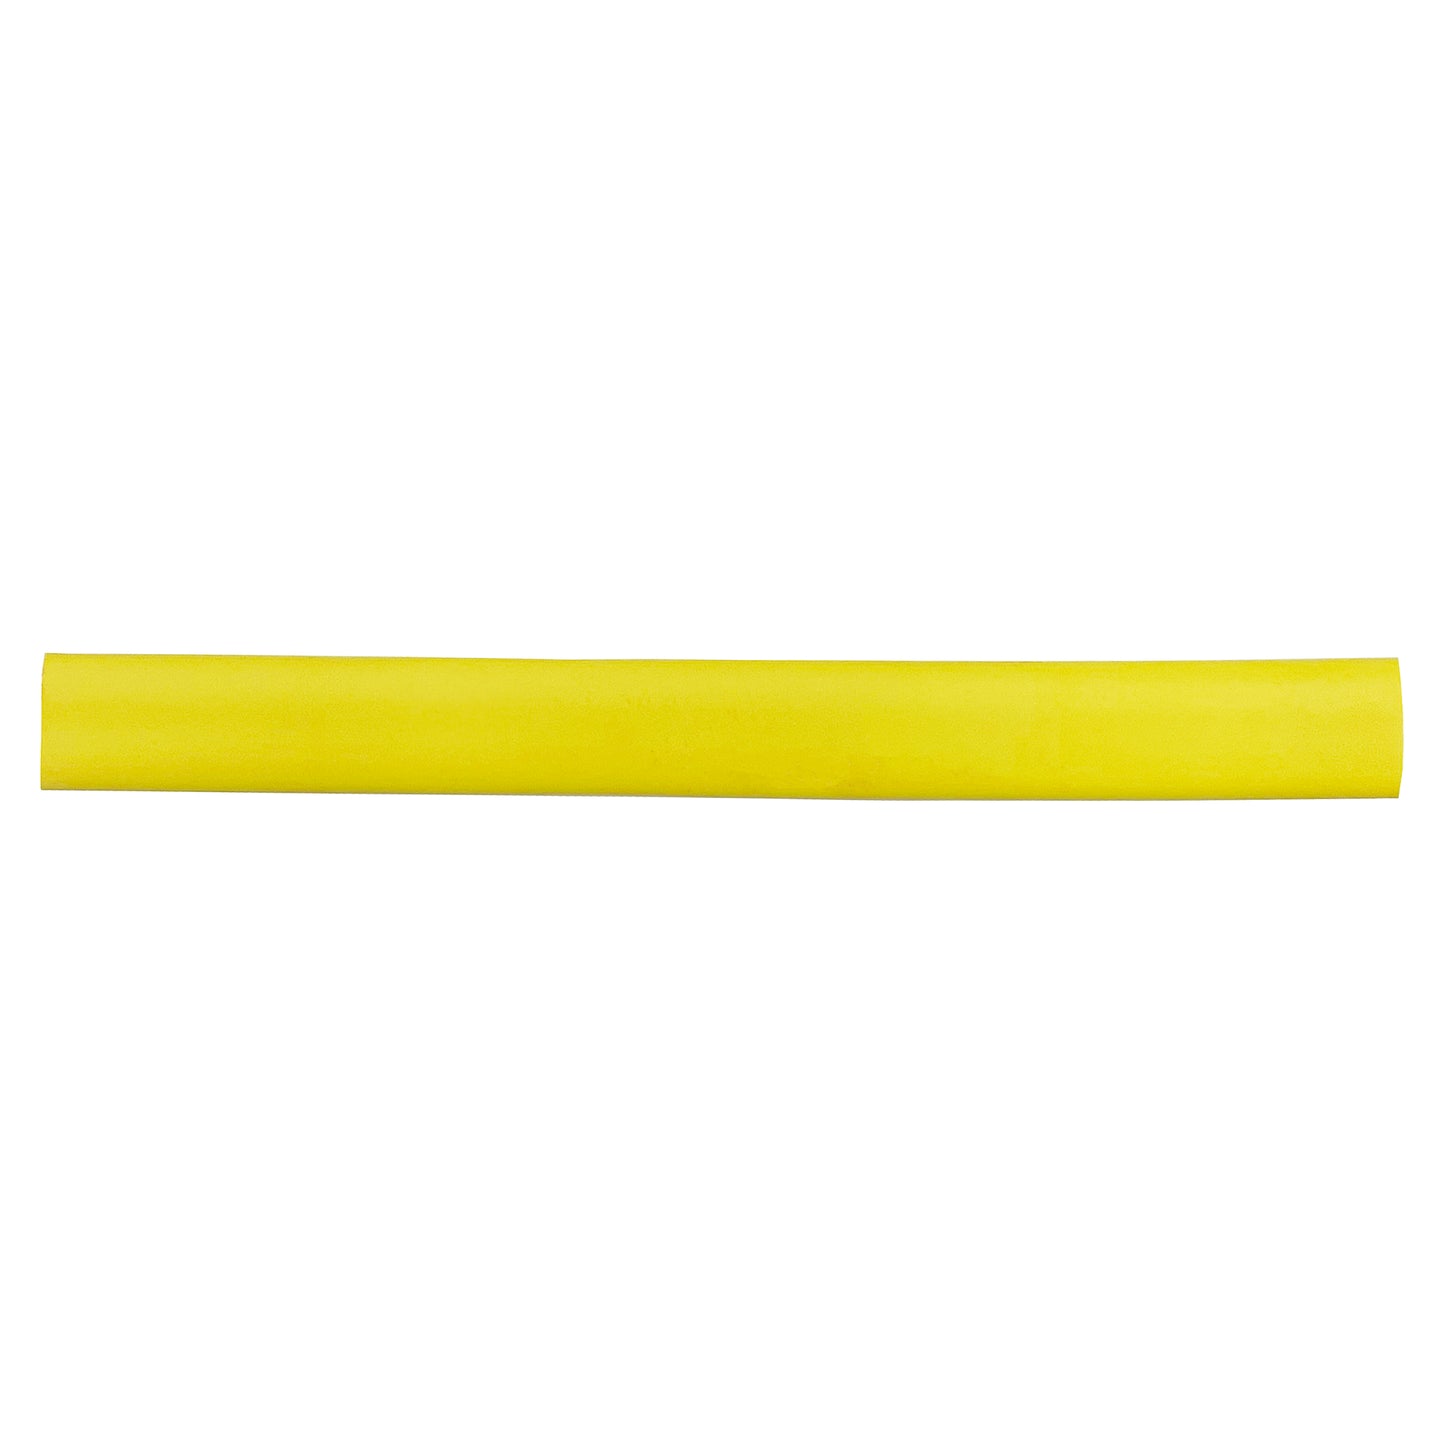 Flexible Thin Single Wall Non-Adhesive Heat Shrink Tubing 2:1 Yellow 3/8" ID - 12" Inch 10 Pack